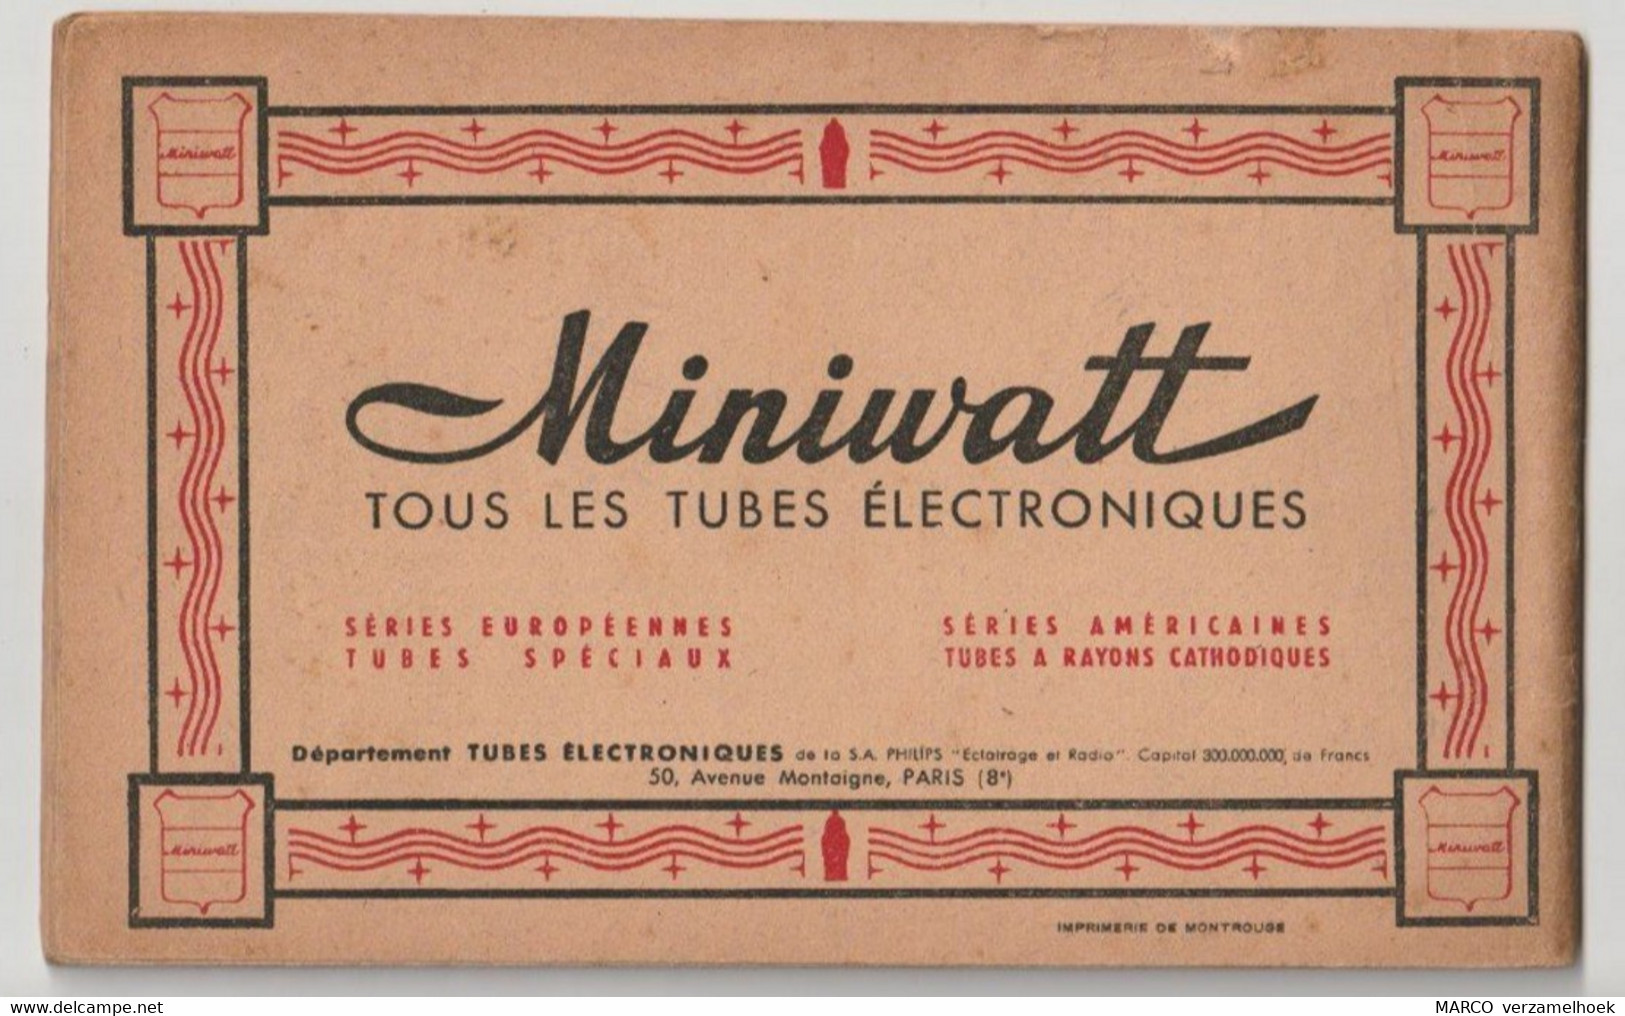 Brochure-leaflet L. Gaudillat LEXIQUE Officiel Des Lampes Radio Paris (F) 1949 Philips Miniwatt - Literatuur & Schema's